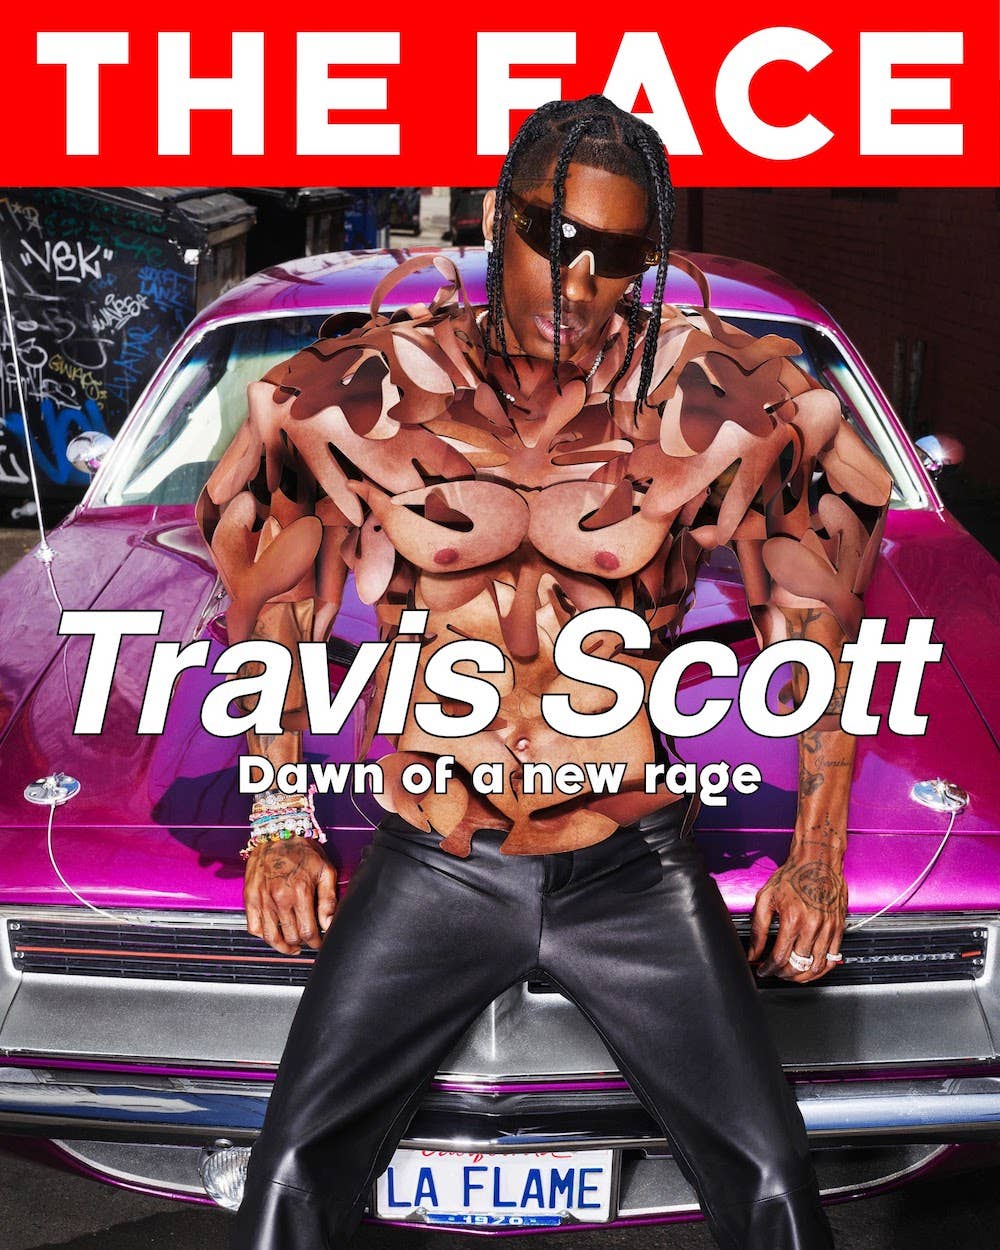 Travis Scott 'The Face'